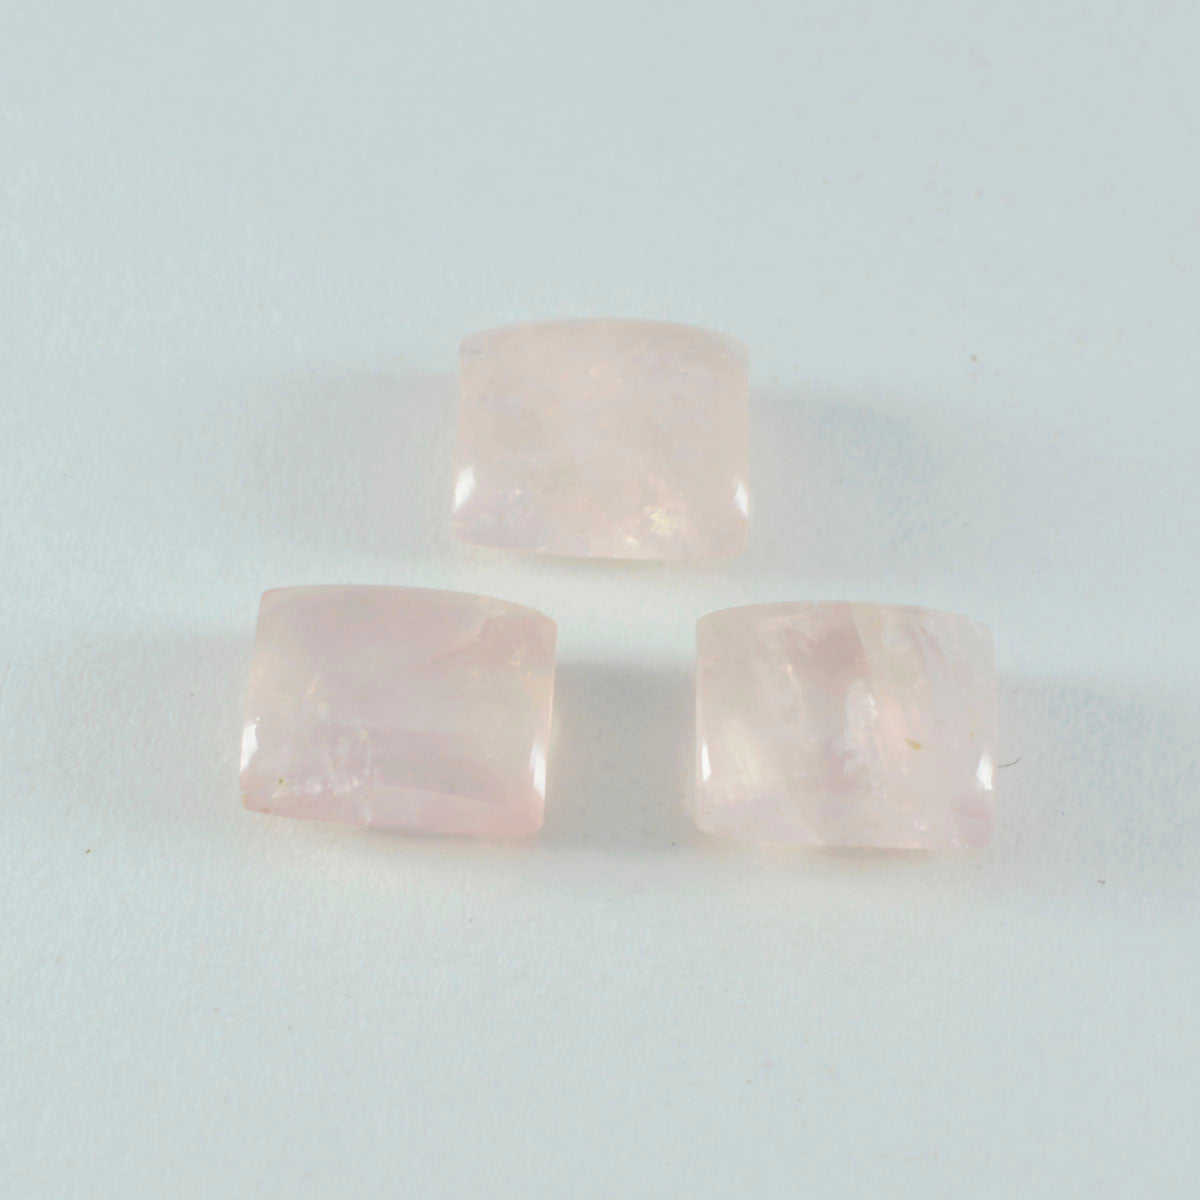 Riyogems 1PC Pink Rose Quartz Cabochon 10x12 mm Octagon Shape fantastic Quality Stone